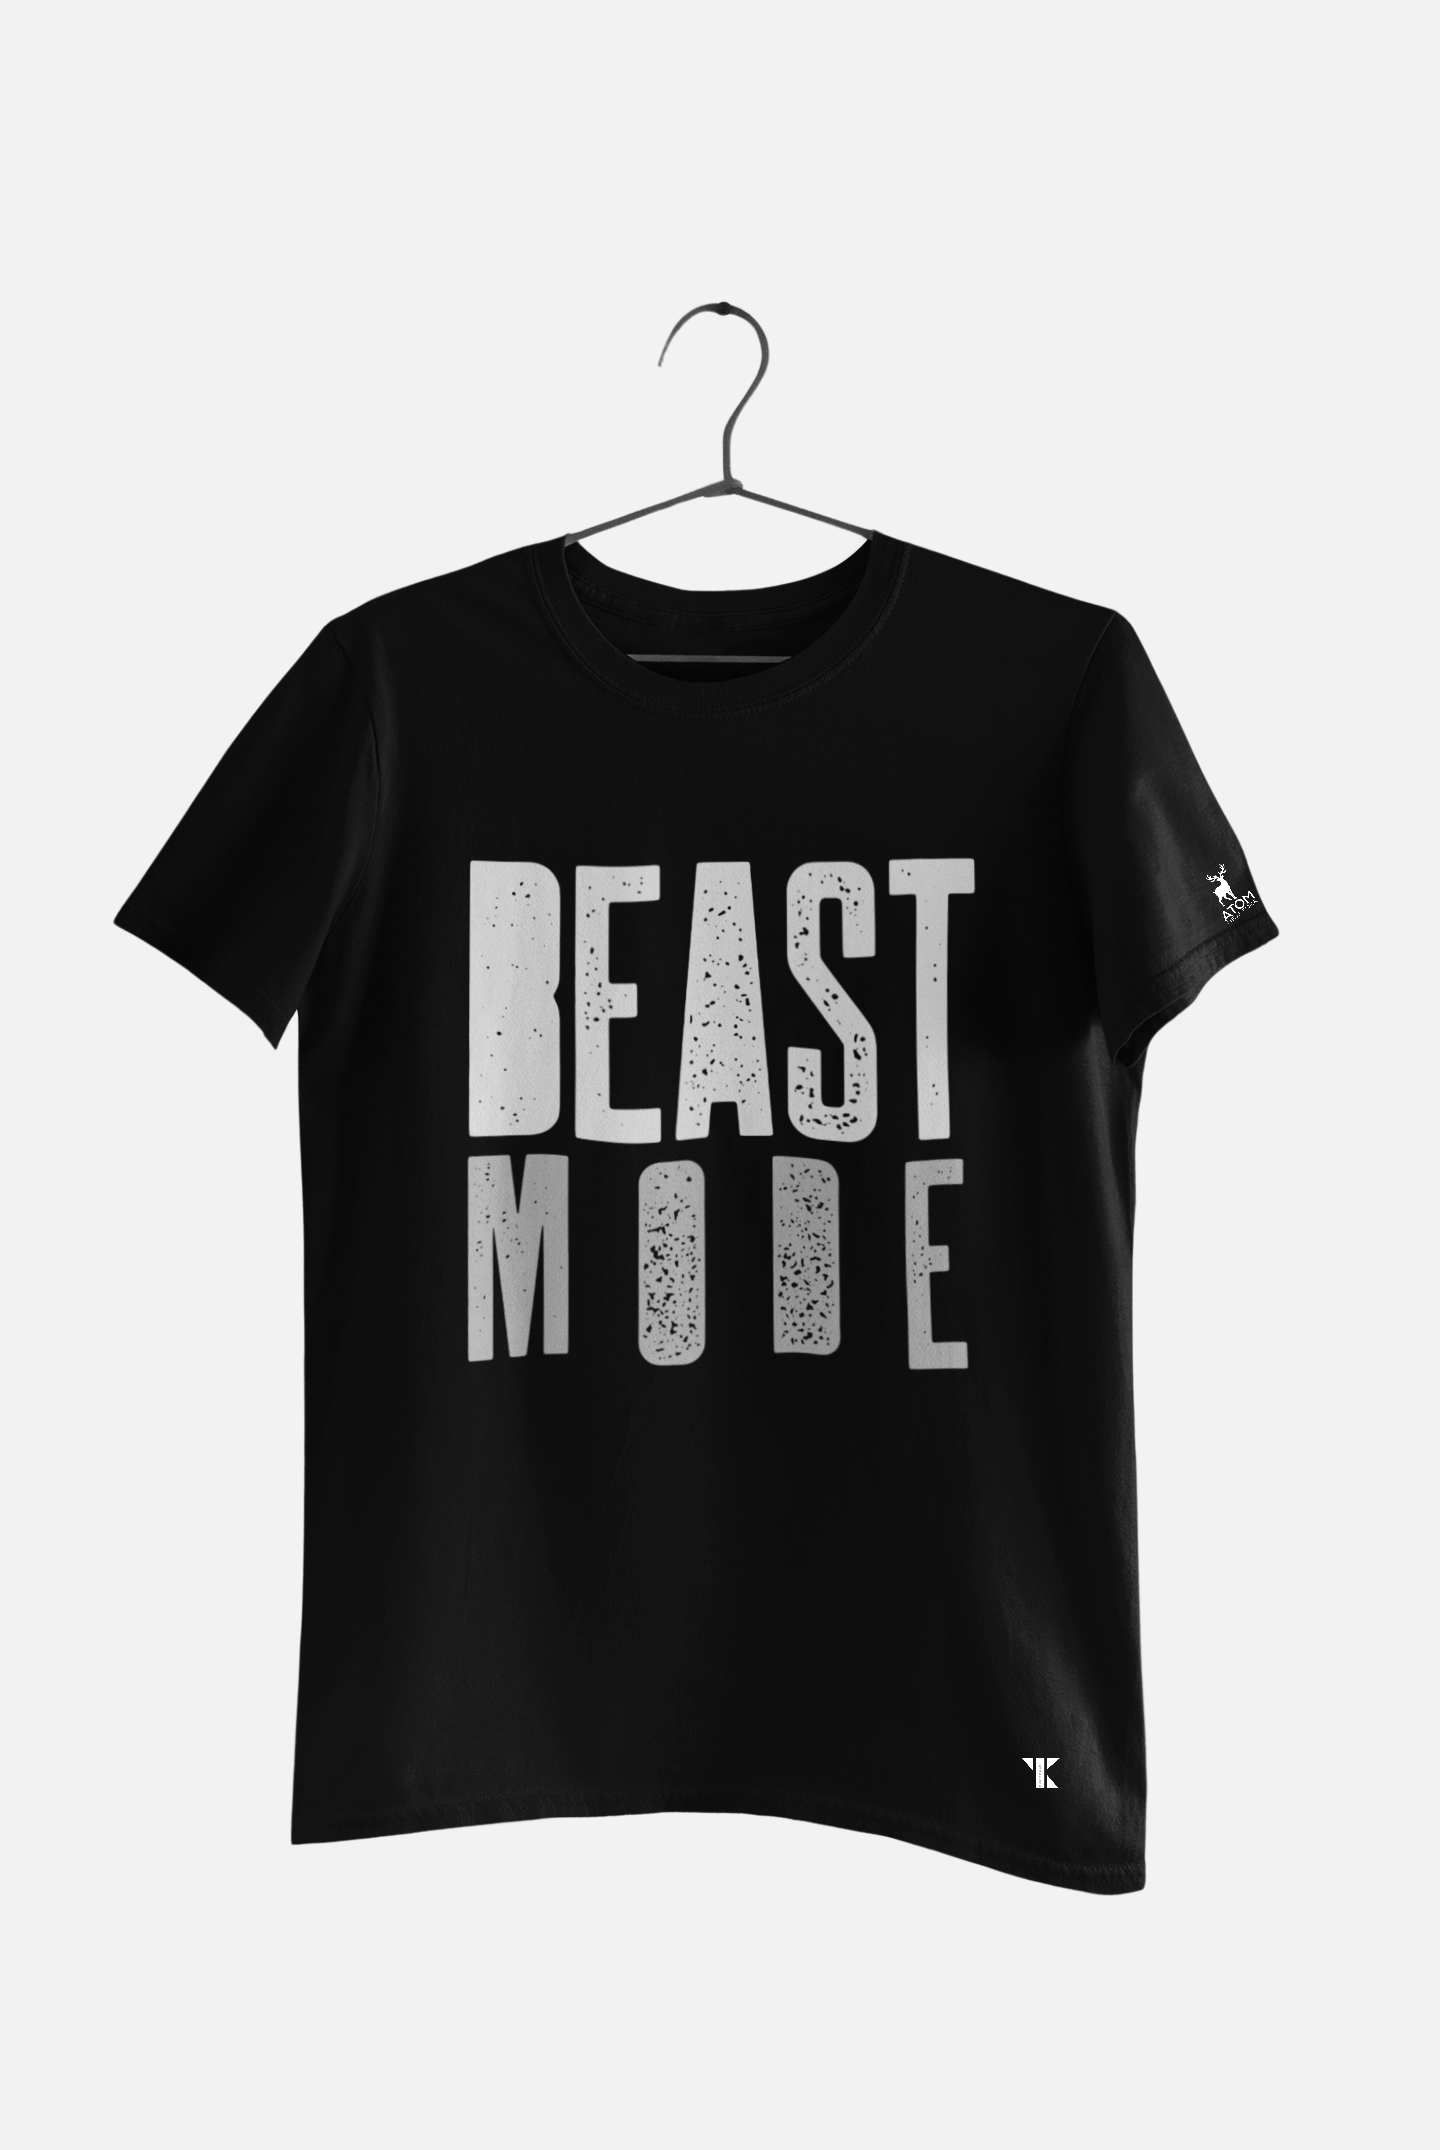 Beast Mode Black Pure Cotton T-Shirt For Men | Tarun Kapoor Collection